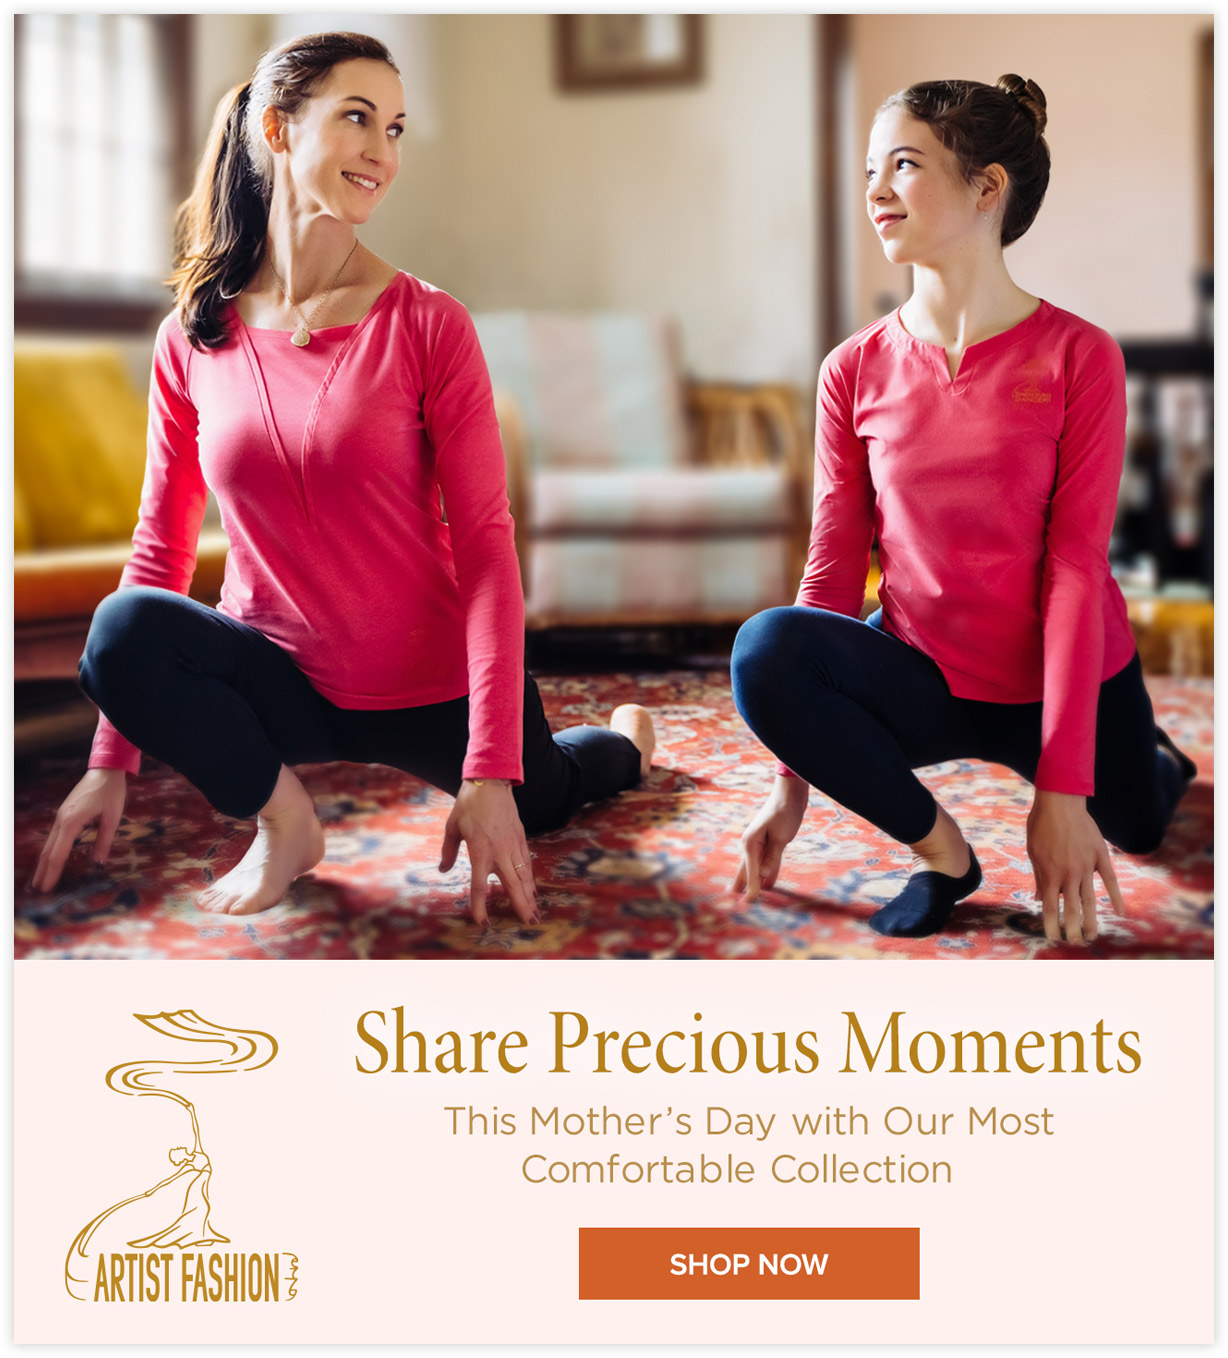 Share Precious Moments